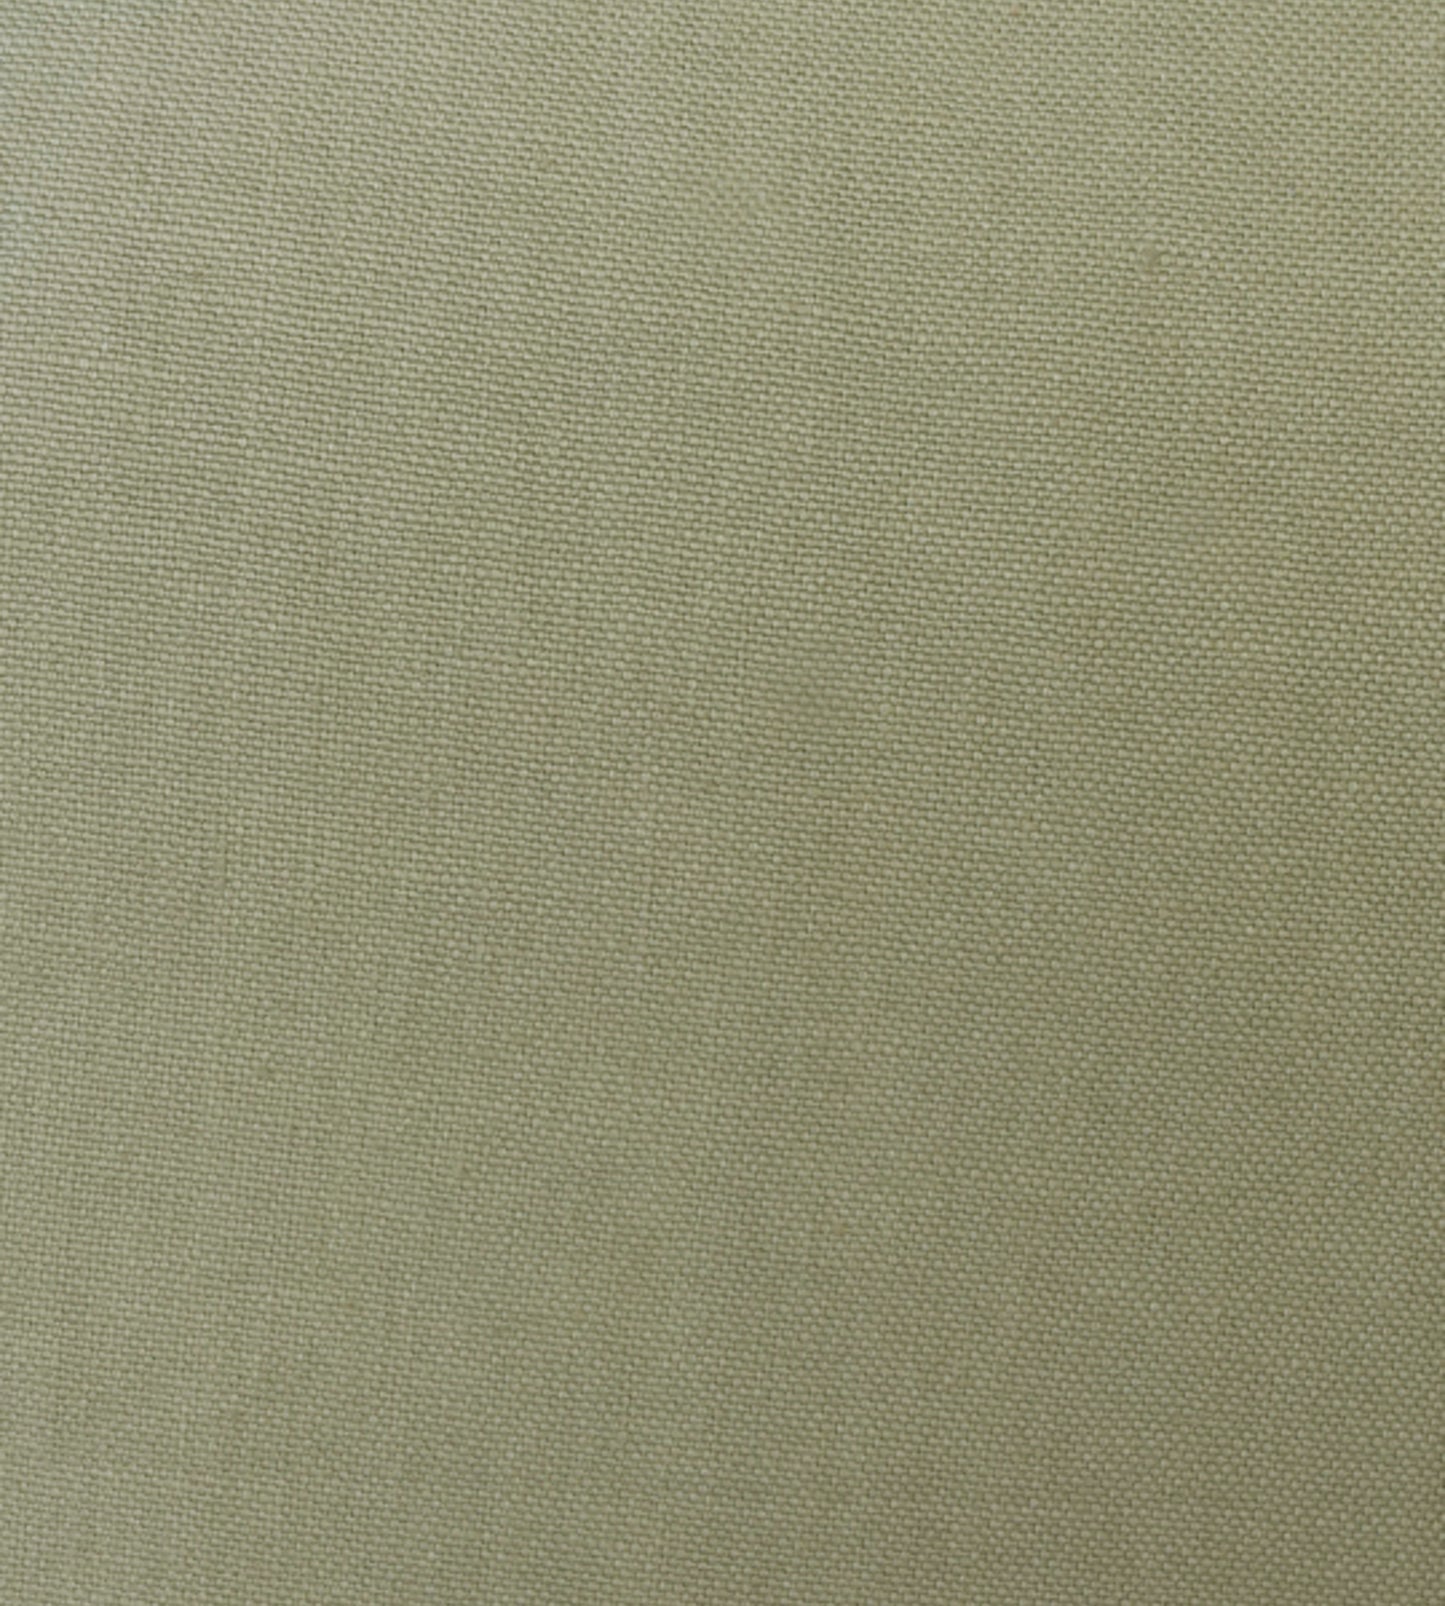 Purchase Scalamandre Fabric Item# SC 005627108, Toscana Linen Stone 1